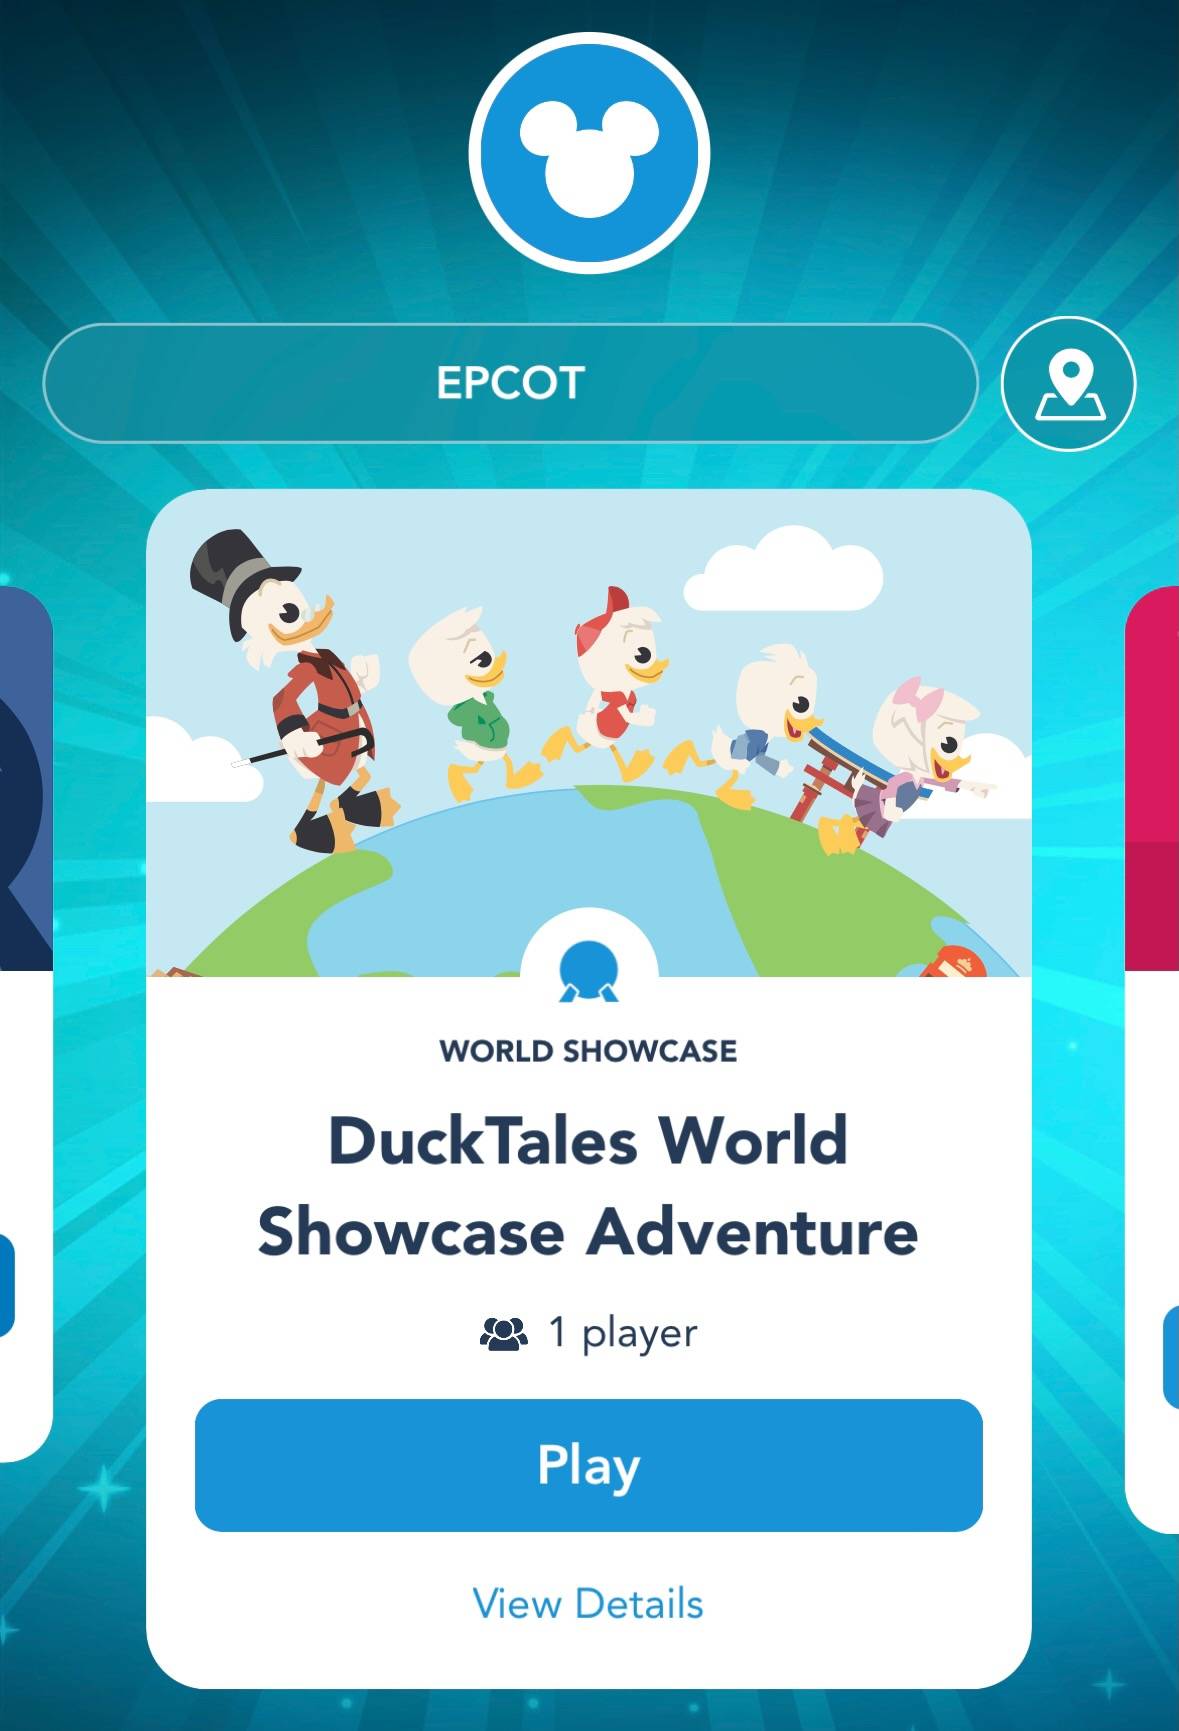 Disney's DuckTales World Showcase Adventure play test